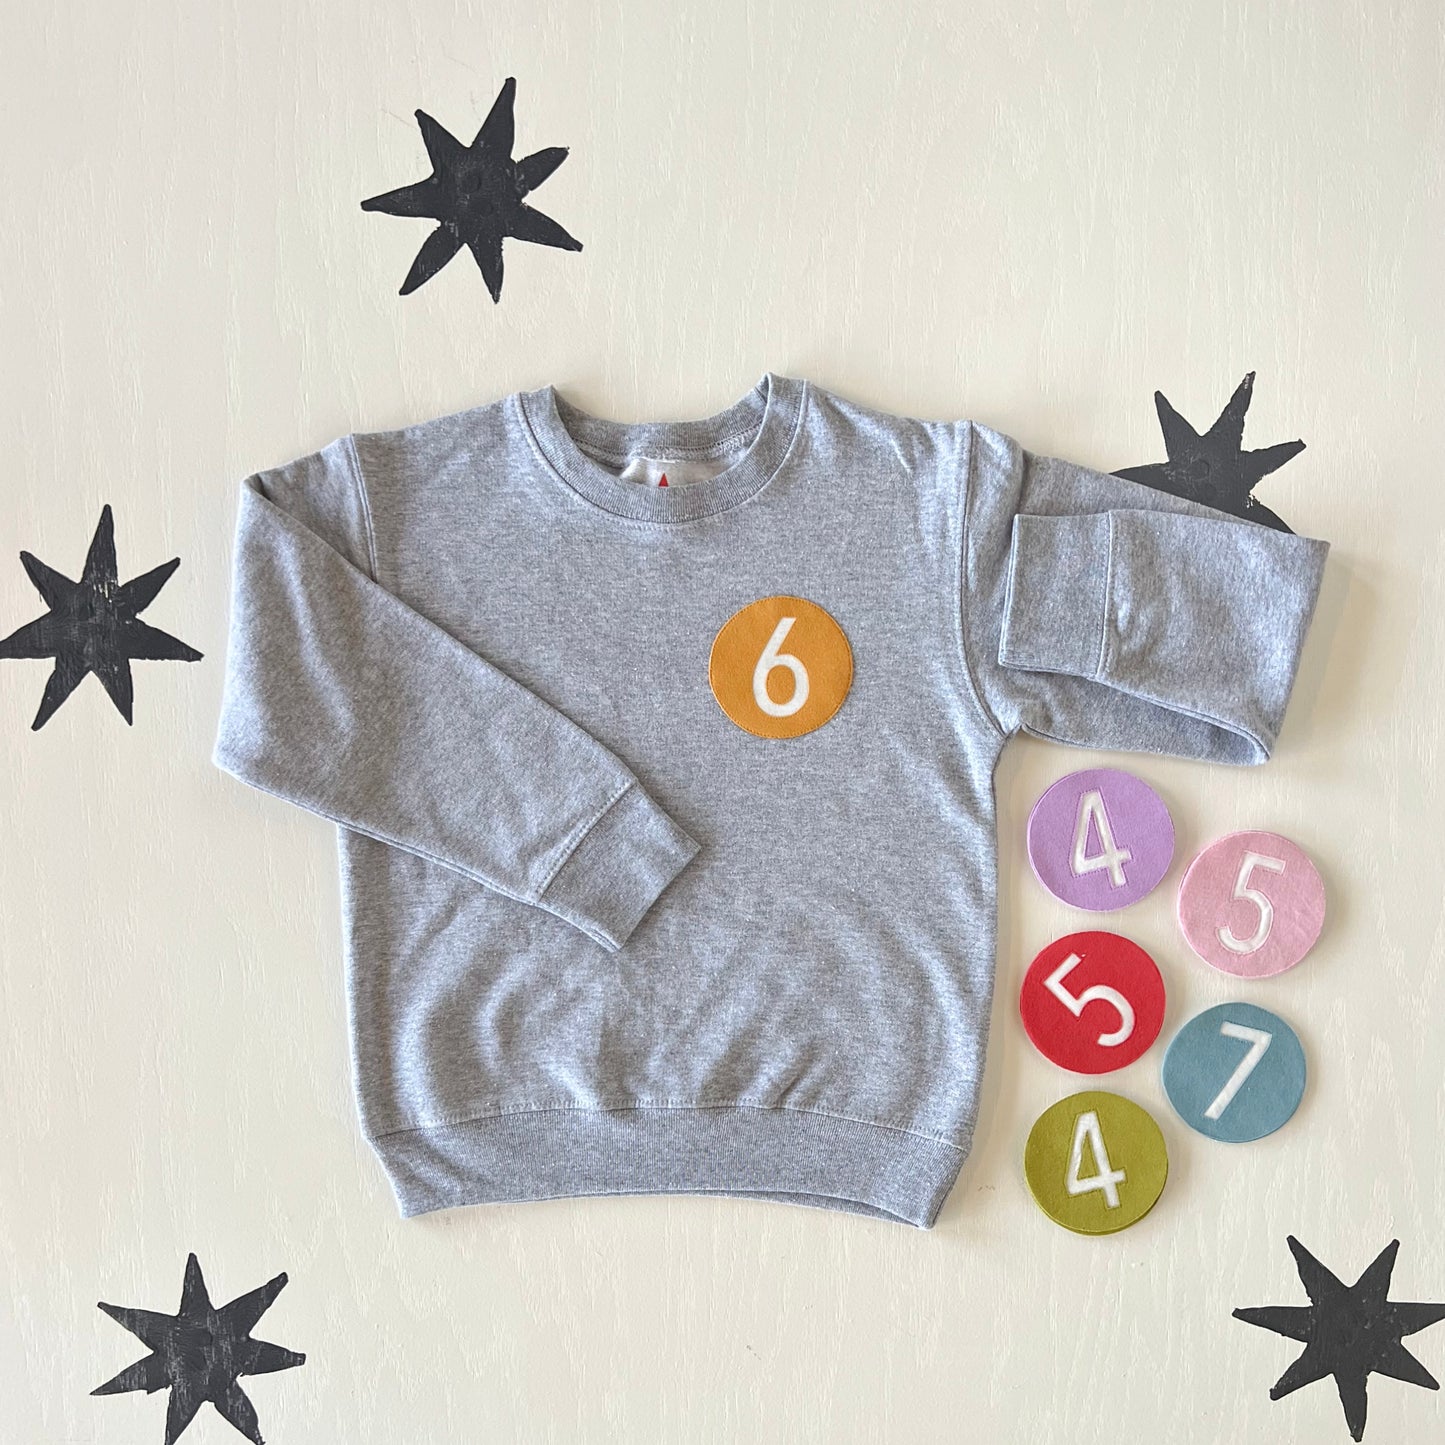 Mini Numbers 4-5-6-7-8: custom size tee or sweatshirt